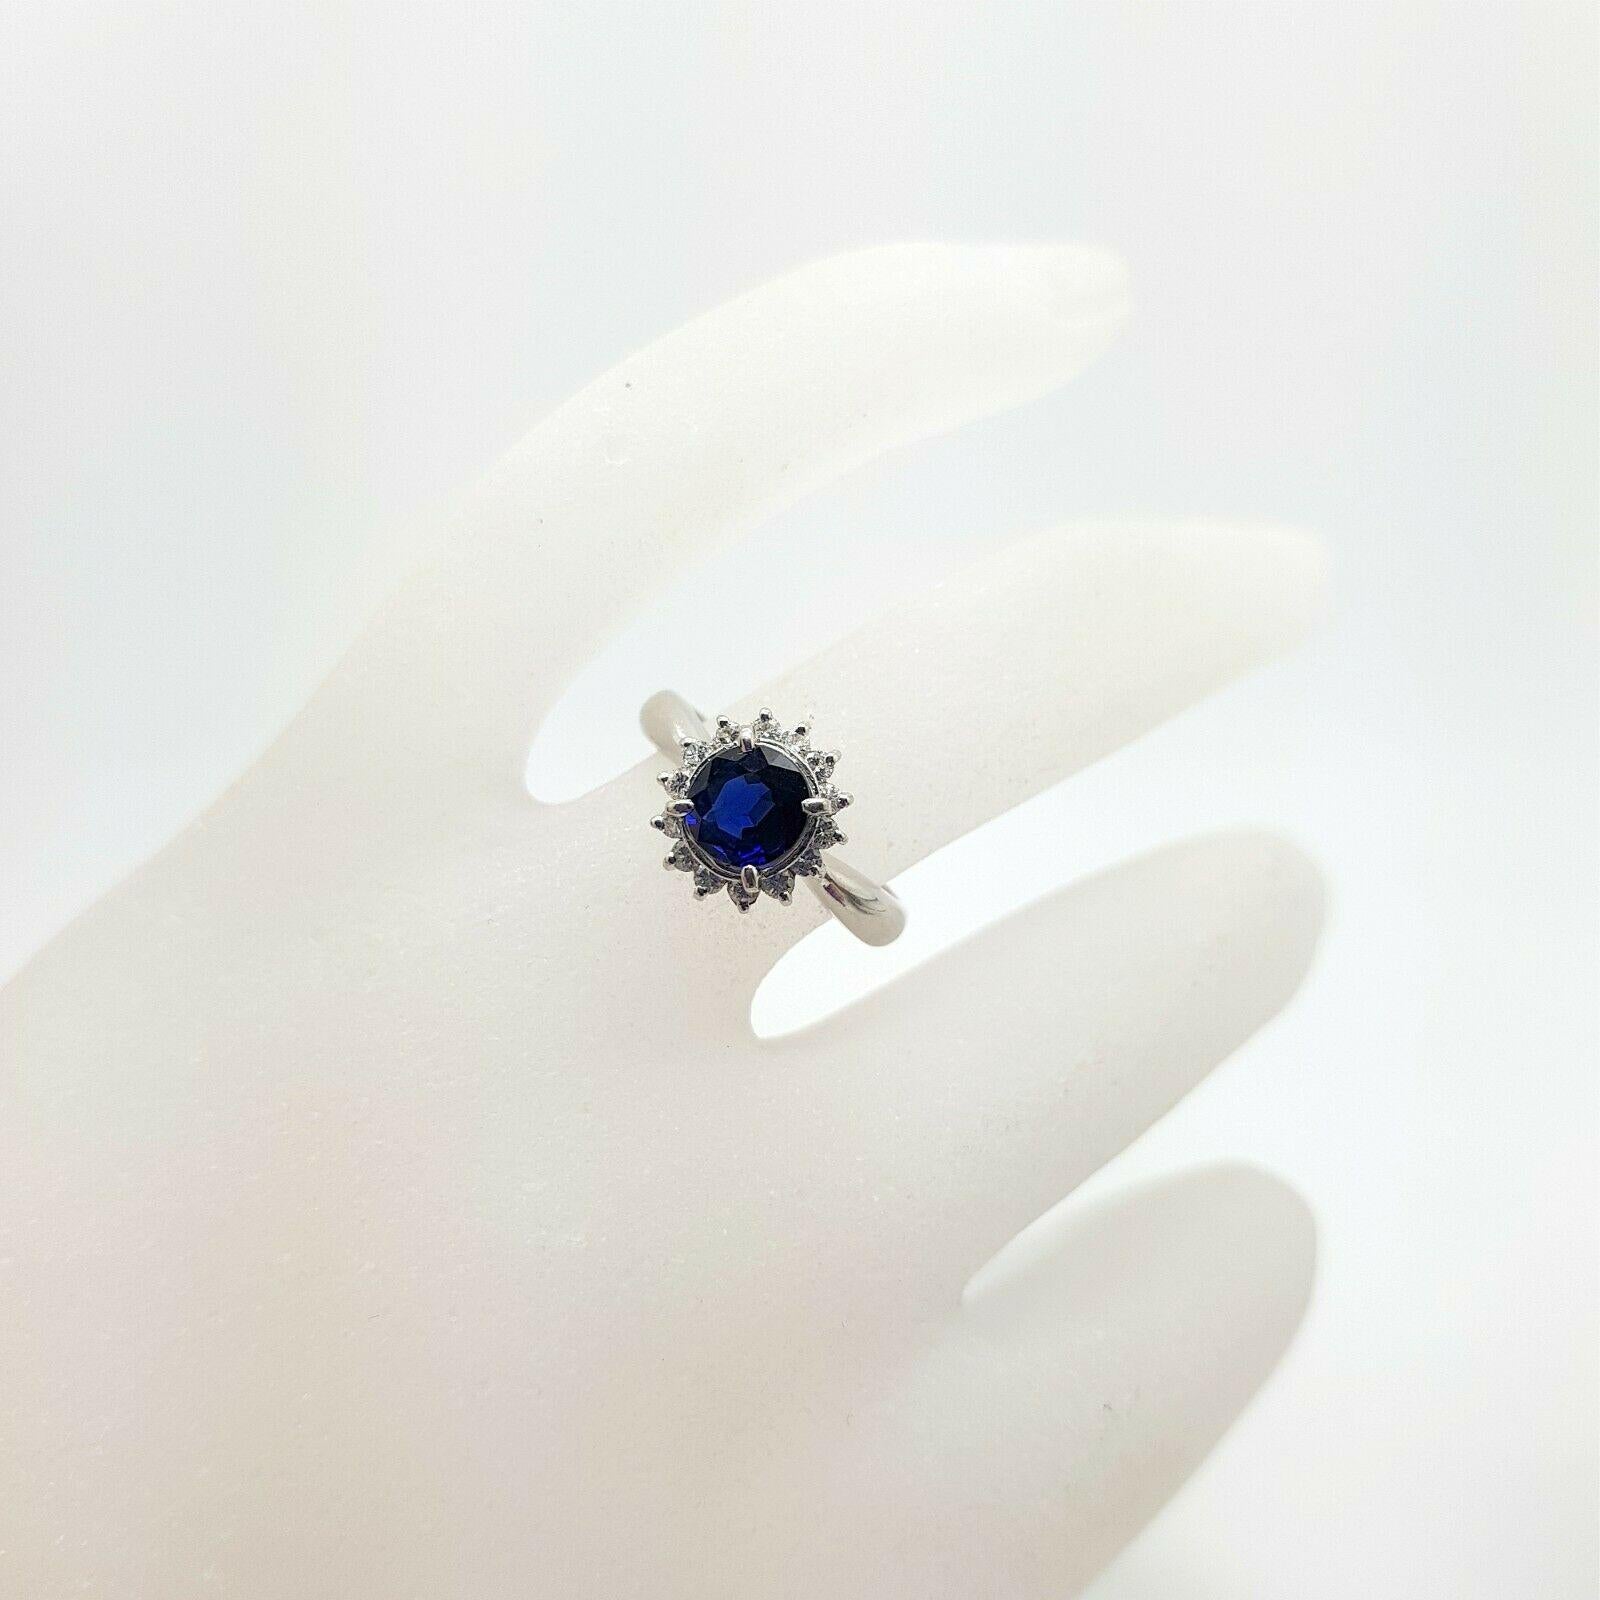 Round Cut Platinum Ring with Nice Intense Blue Sapphire and Diamonds